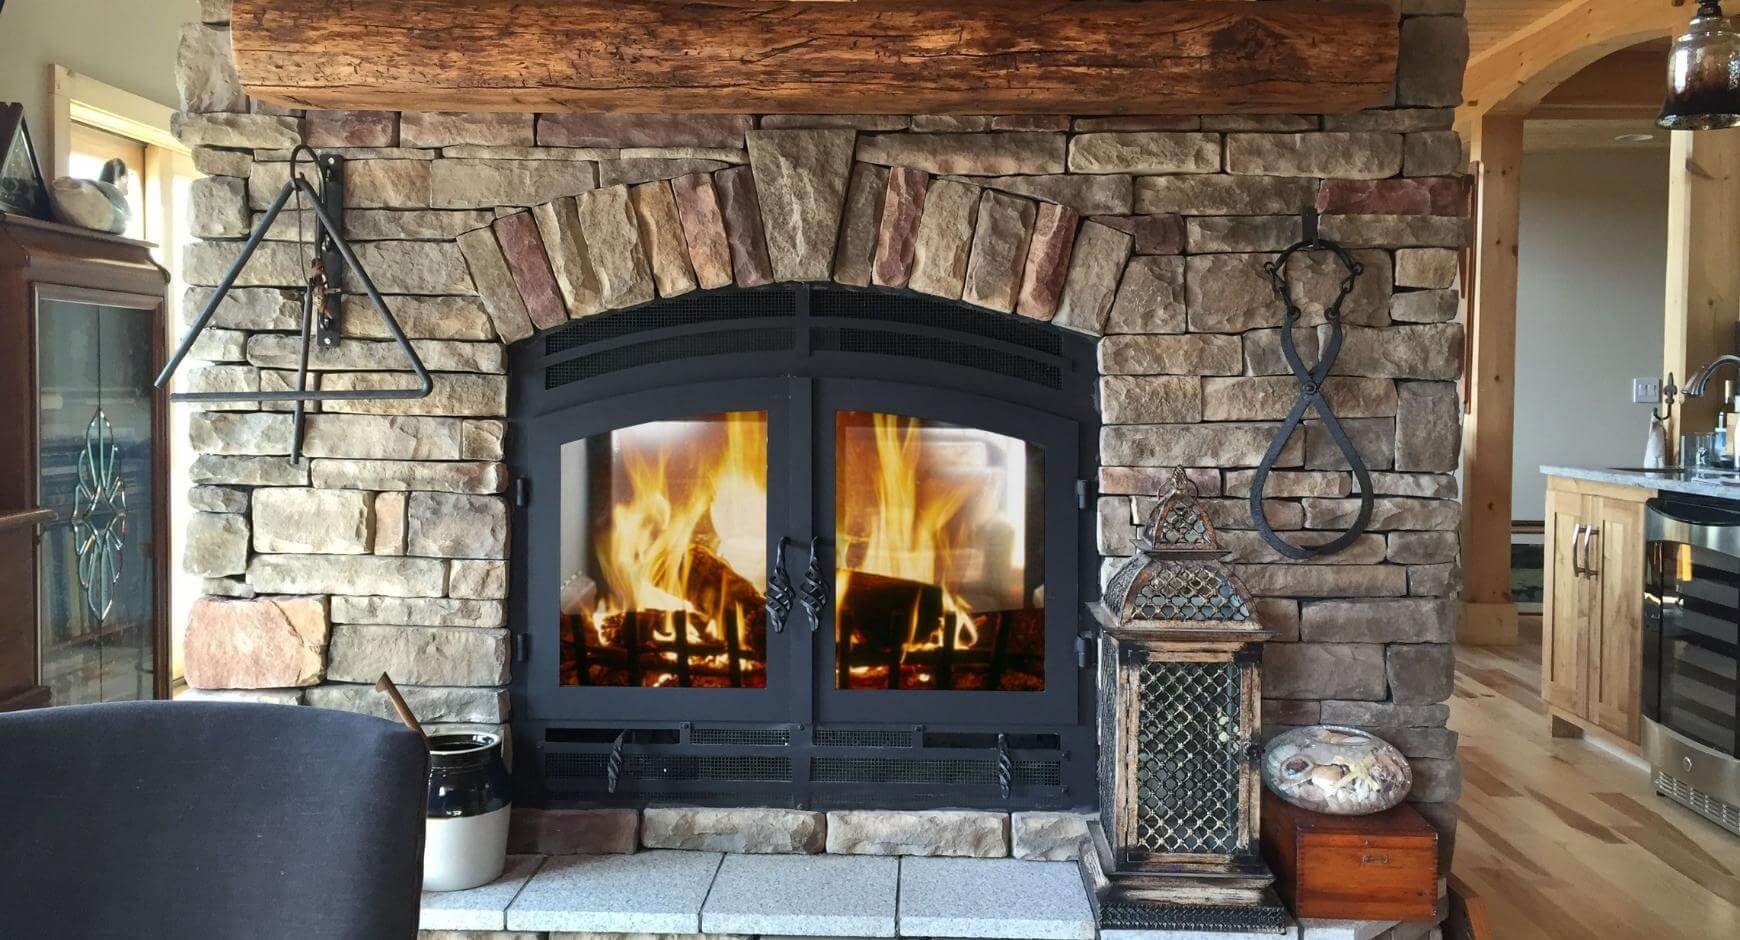 Wood fireplace burning behind glass doors